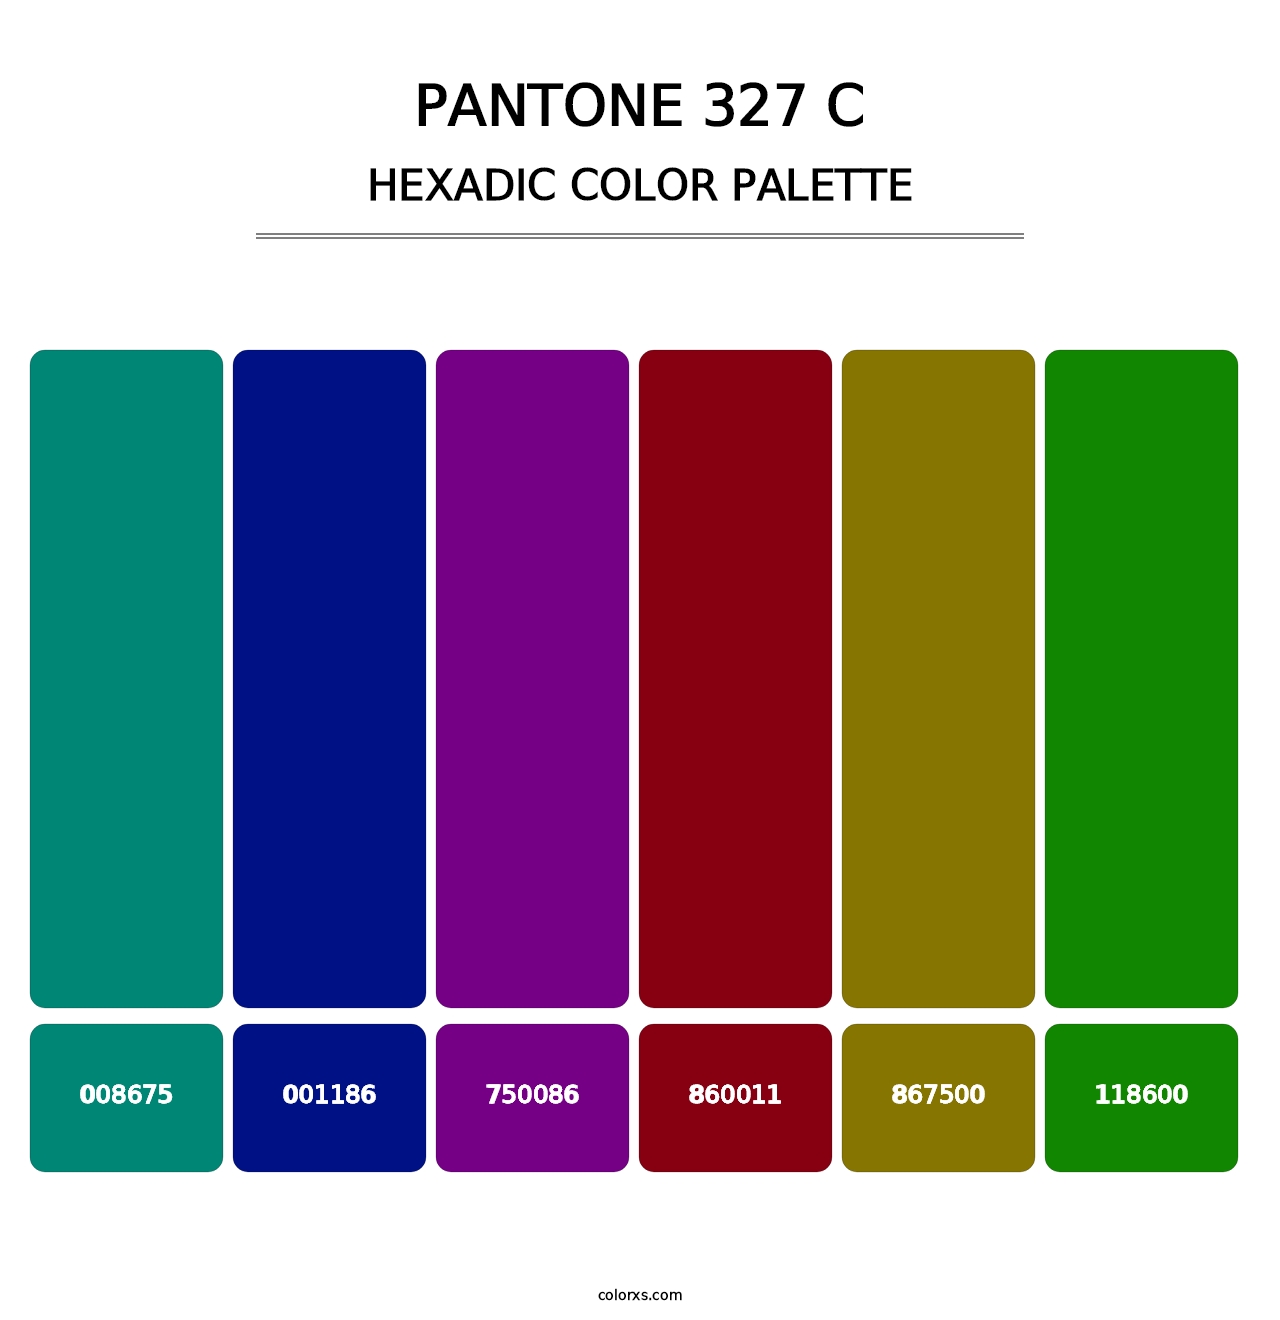 PANTONE 327 C - Hexadic Color Palette